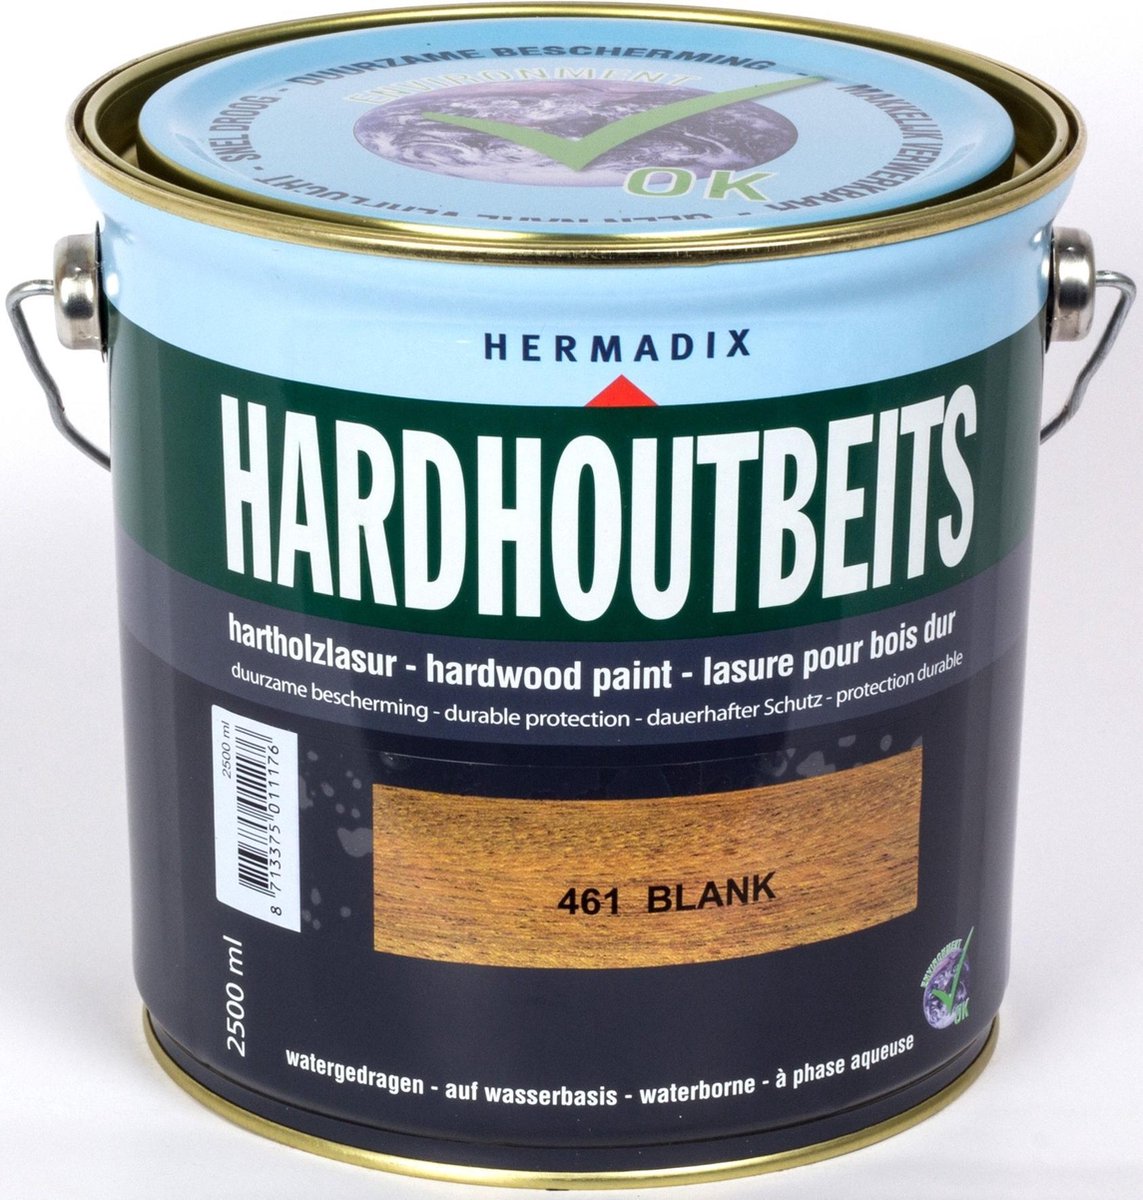 Hermadix Hardhout Beits - 2,5 liter - 461 Blank |